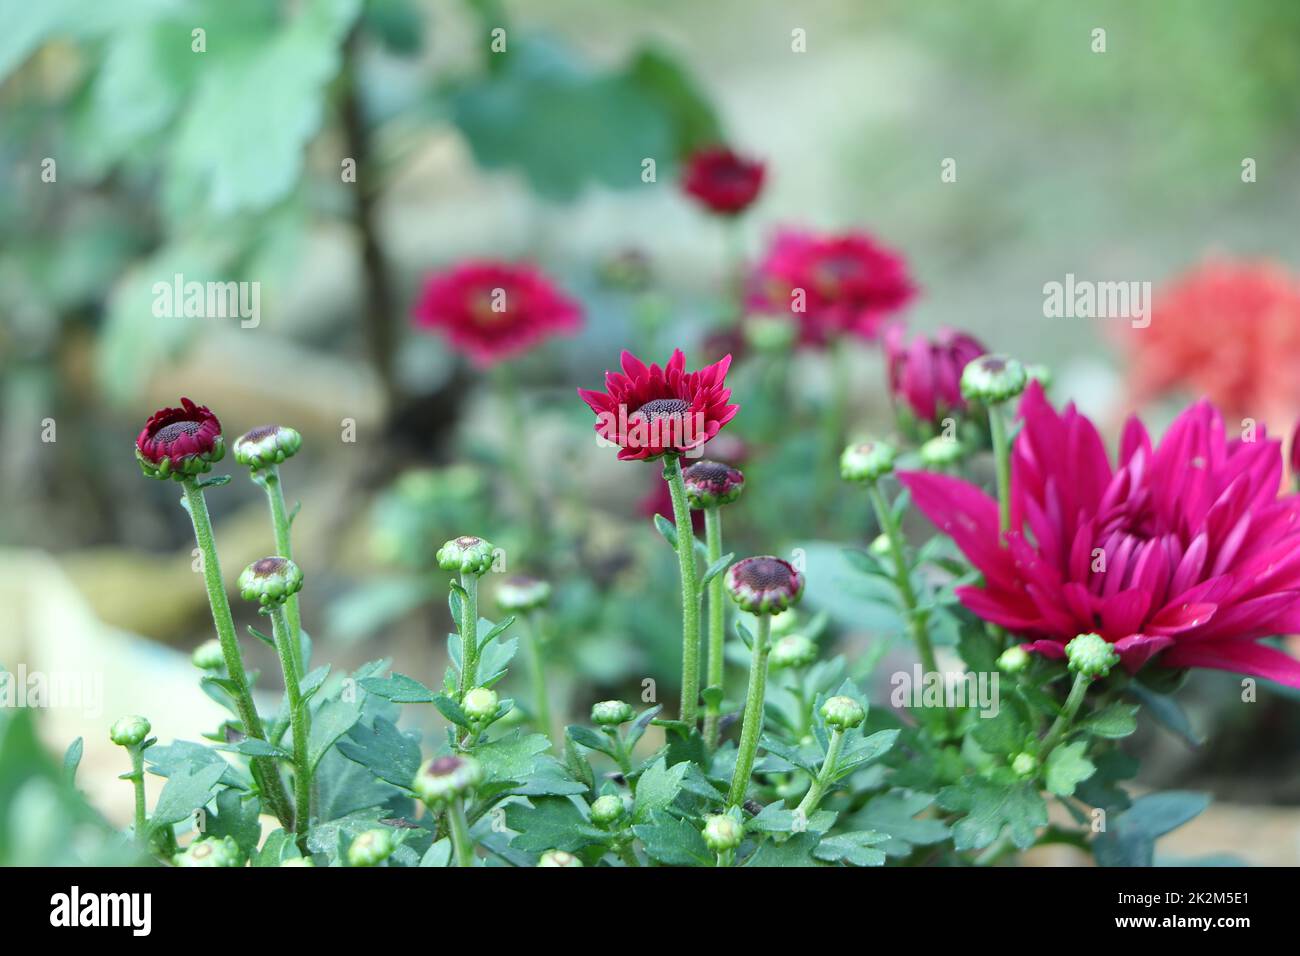 Rosa Chrysanthemen Stockfoto